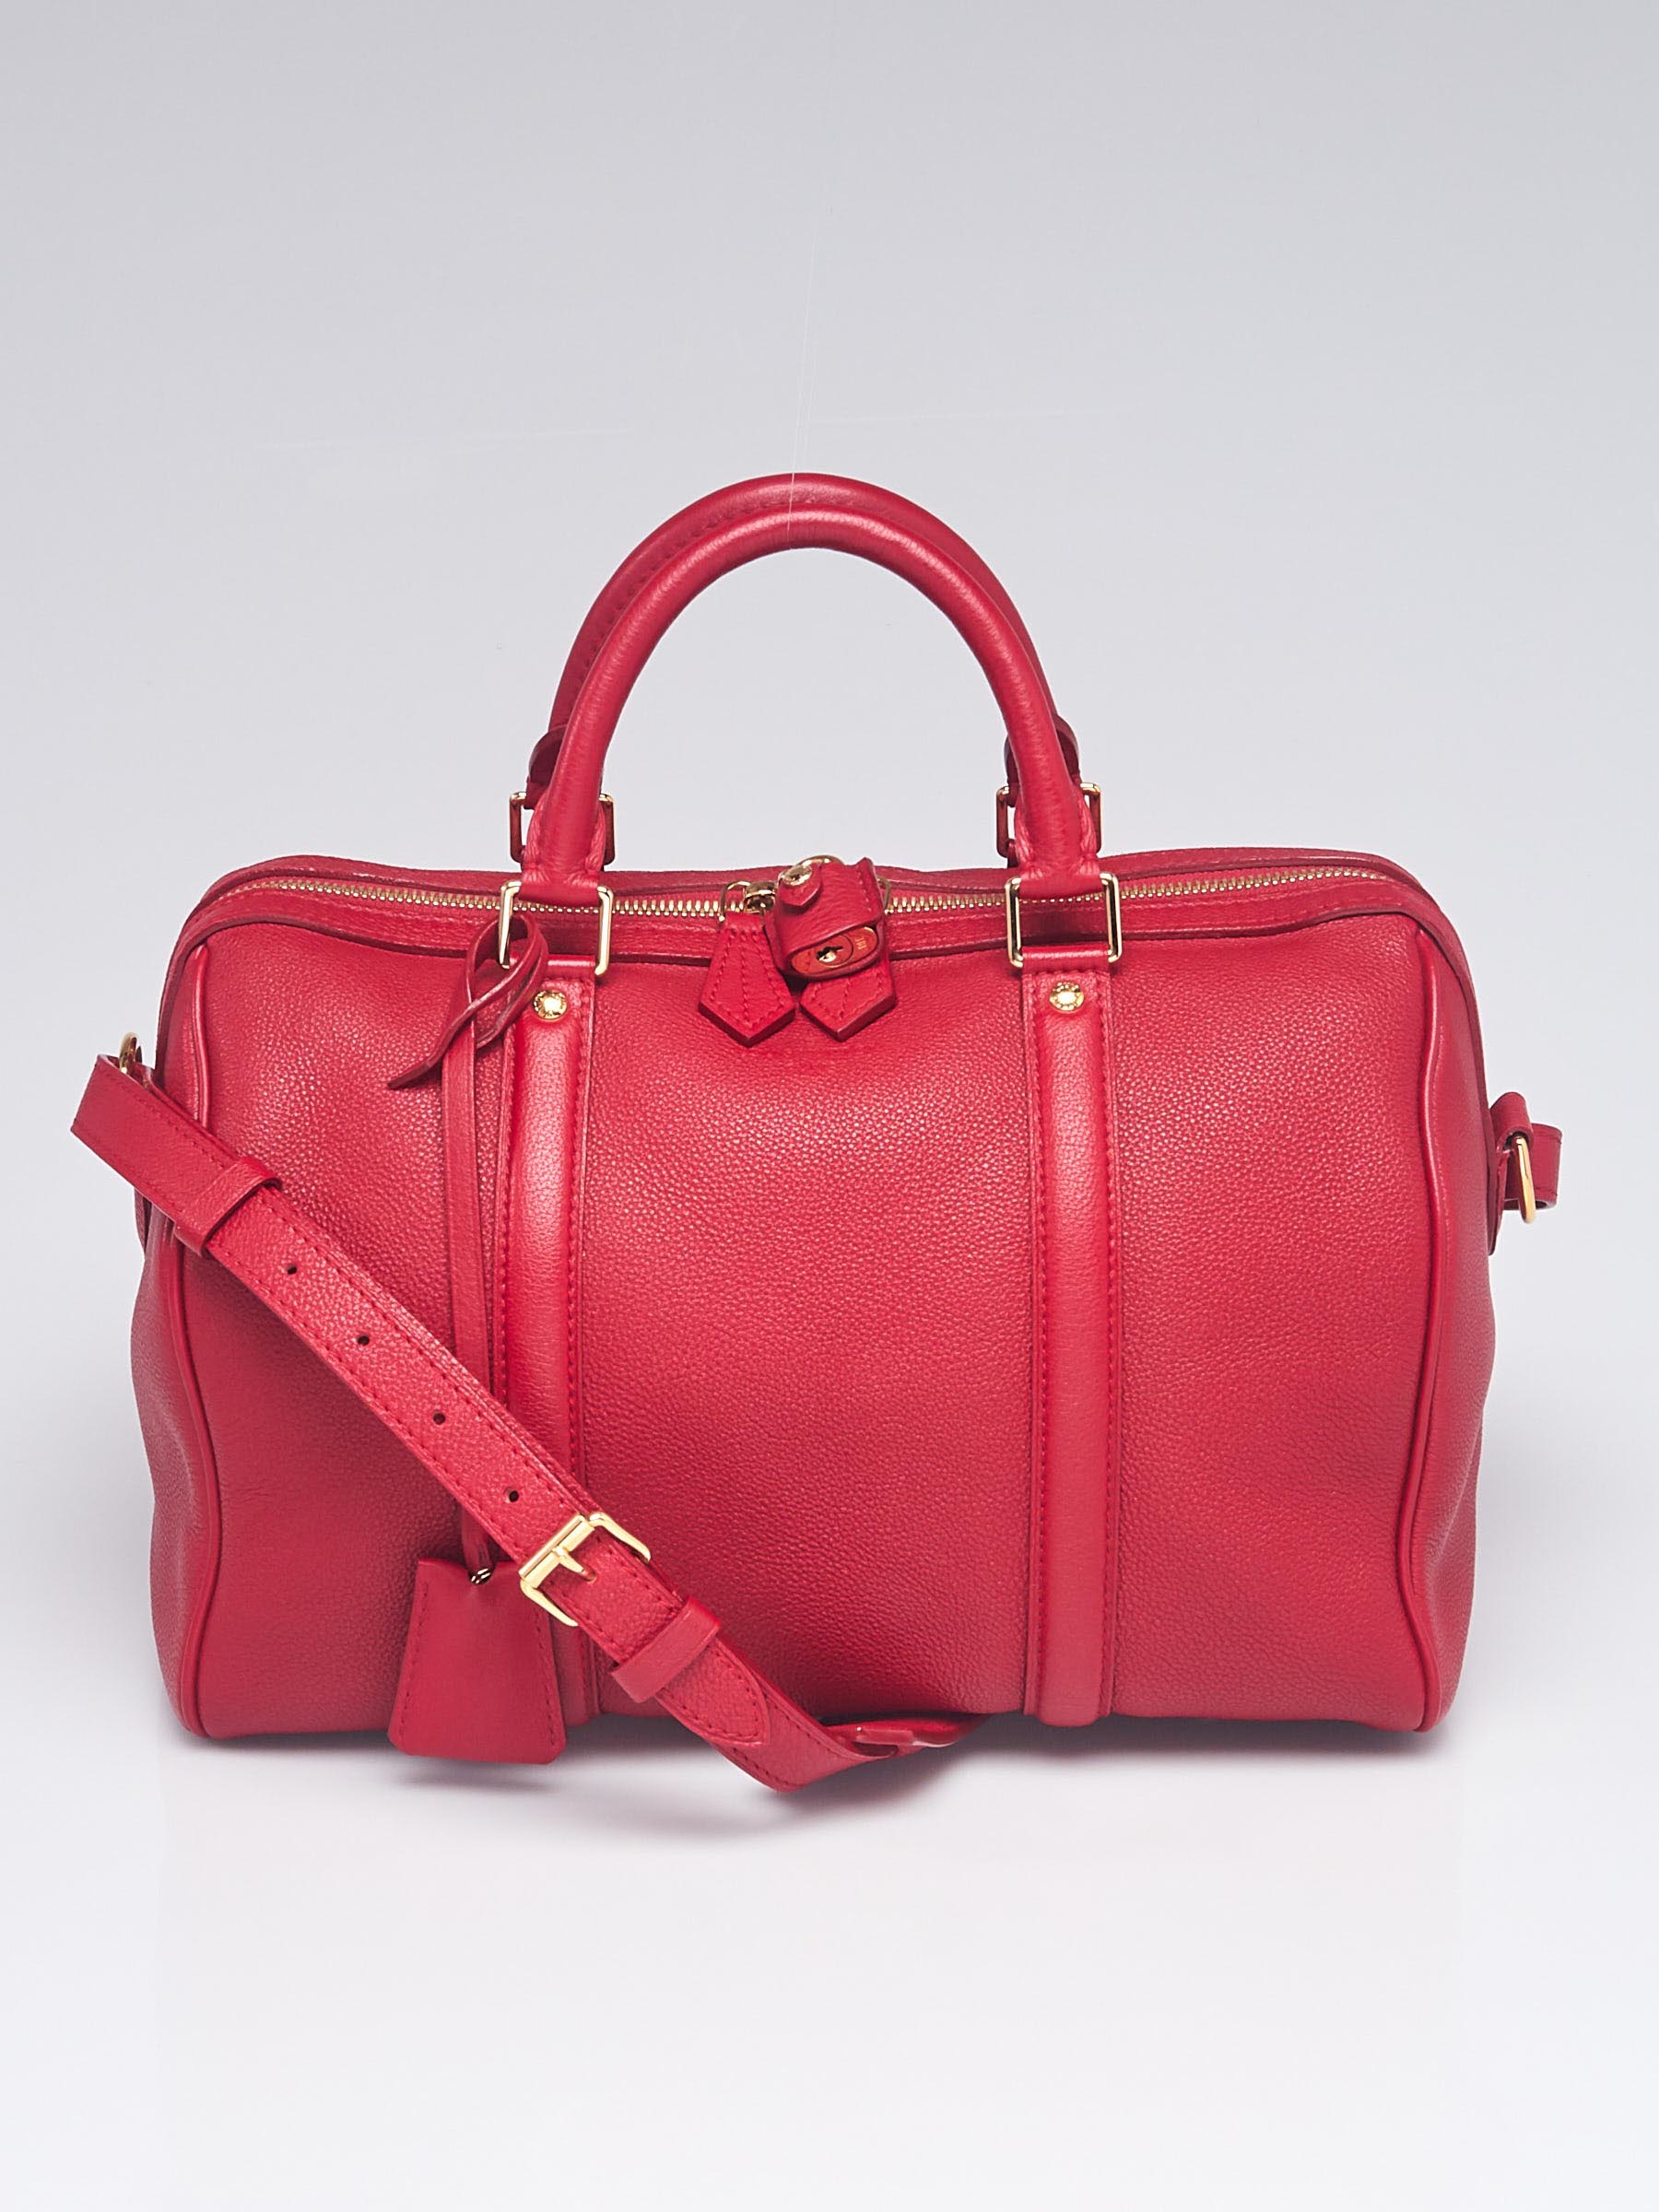 Louis Vuitton Sofia Coppola Calf Leather Bag: Cherry